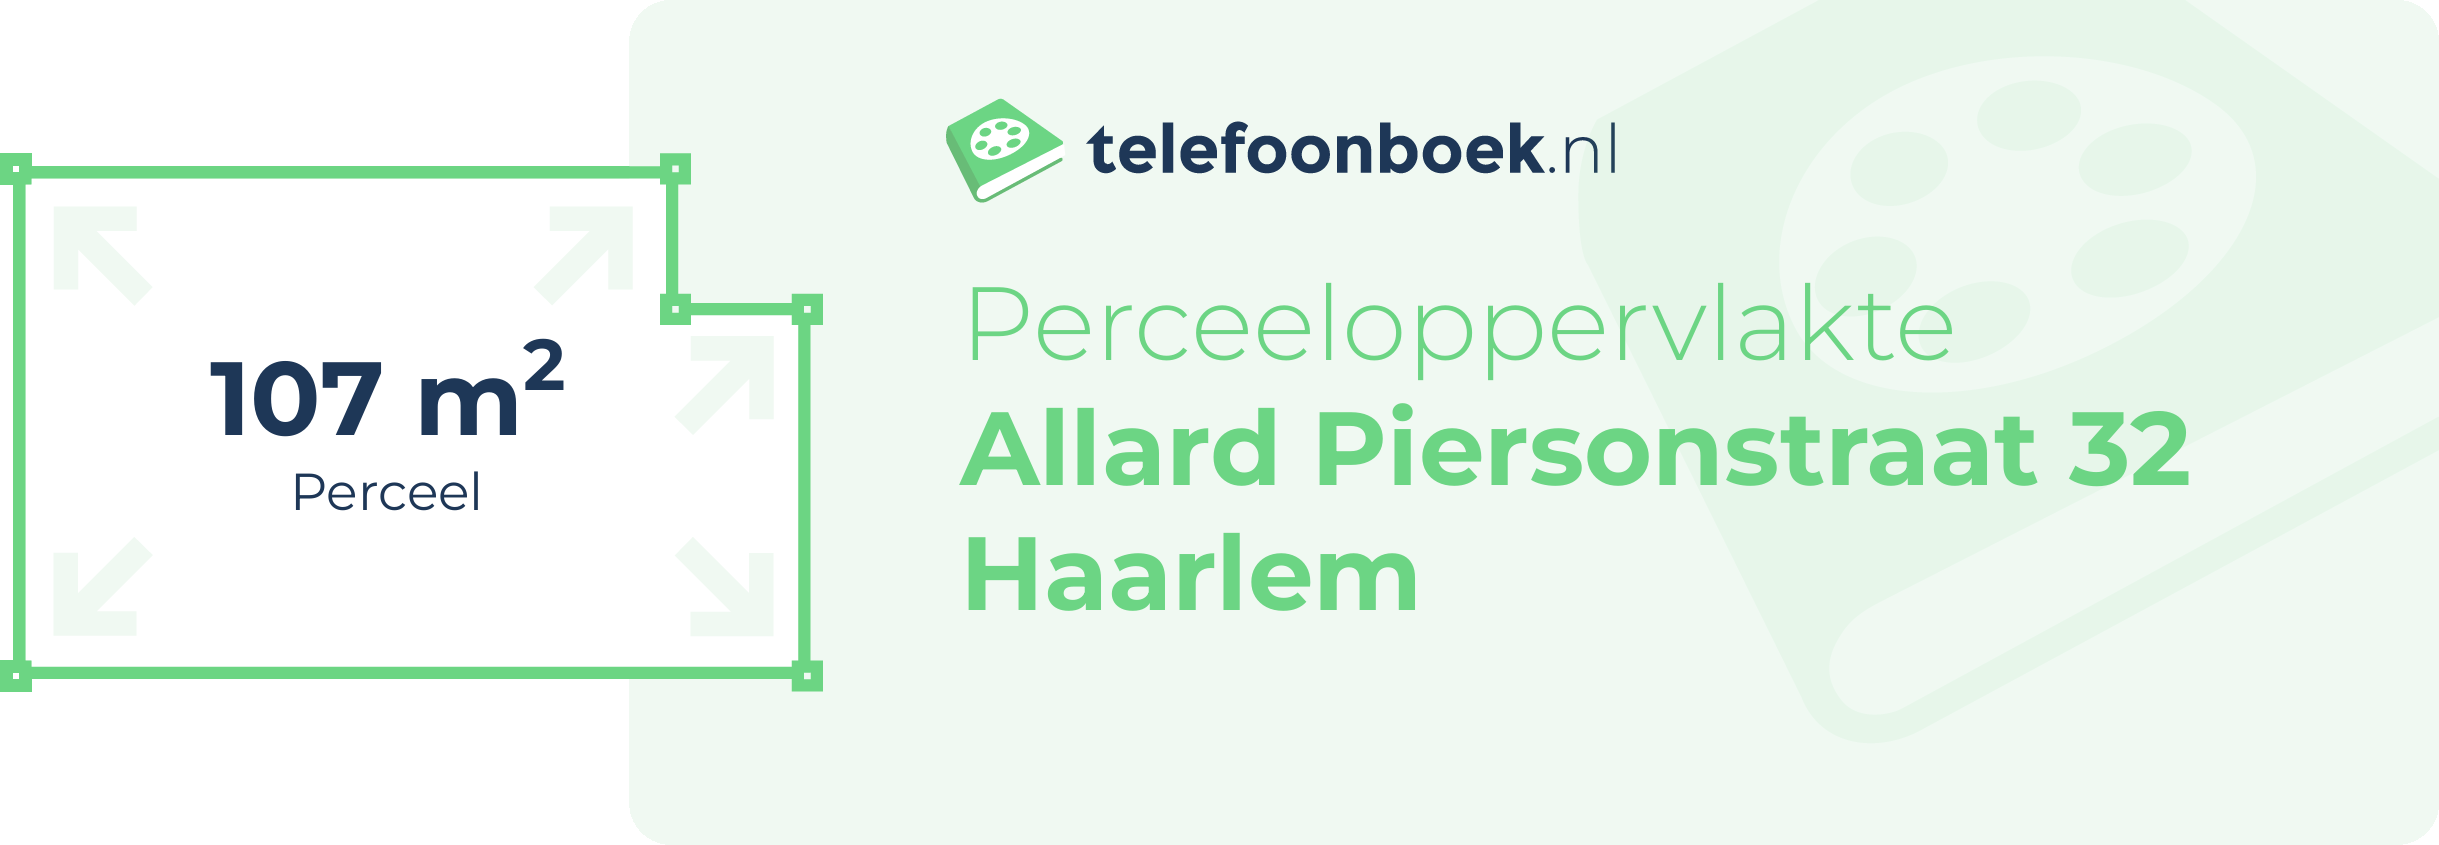 Perceeloppervlakte Allard Piersonstraat 32 Haarlem